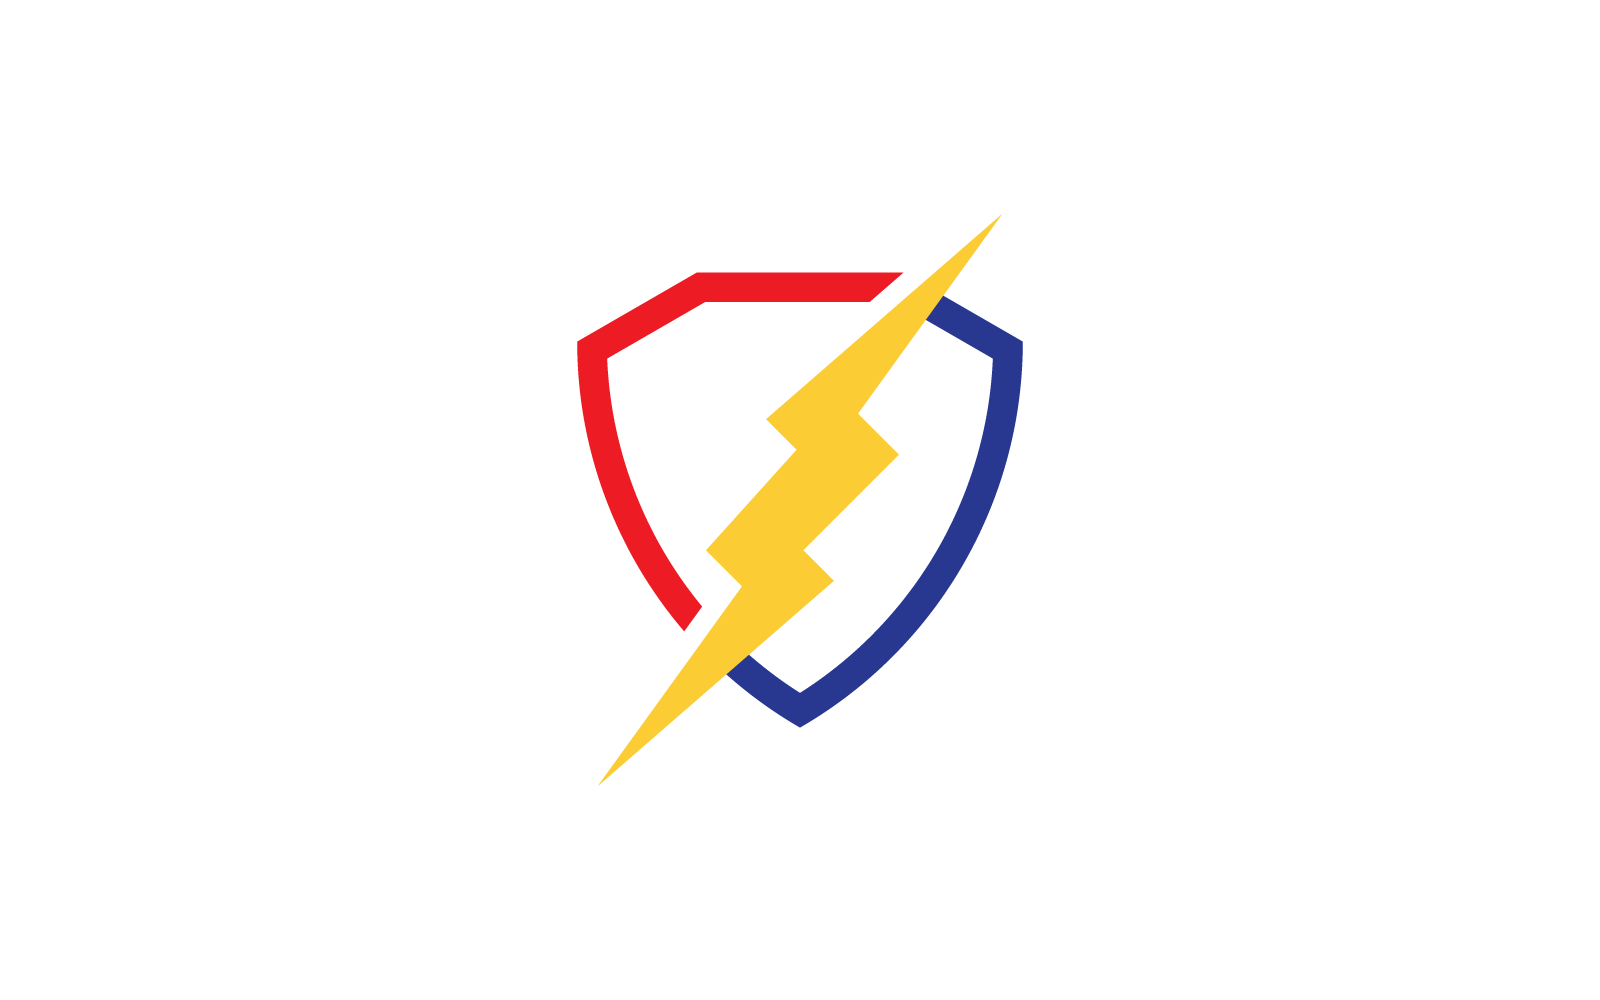 Power lightning power energy icon vector logo template